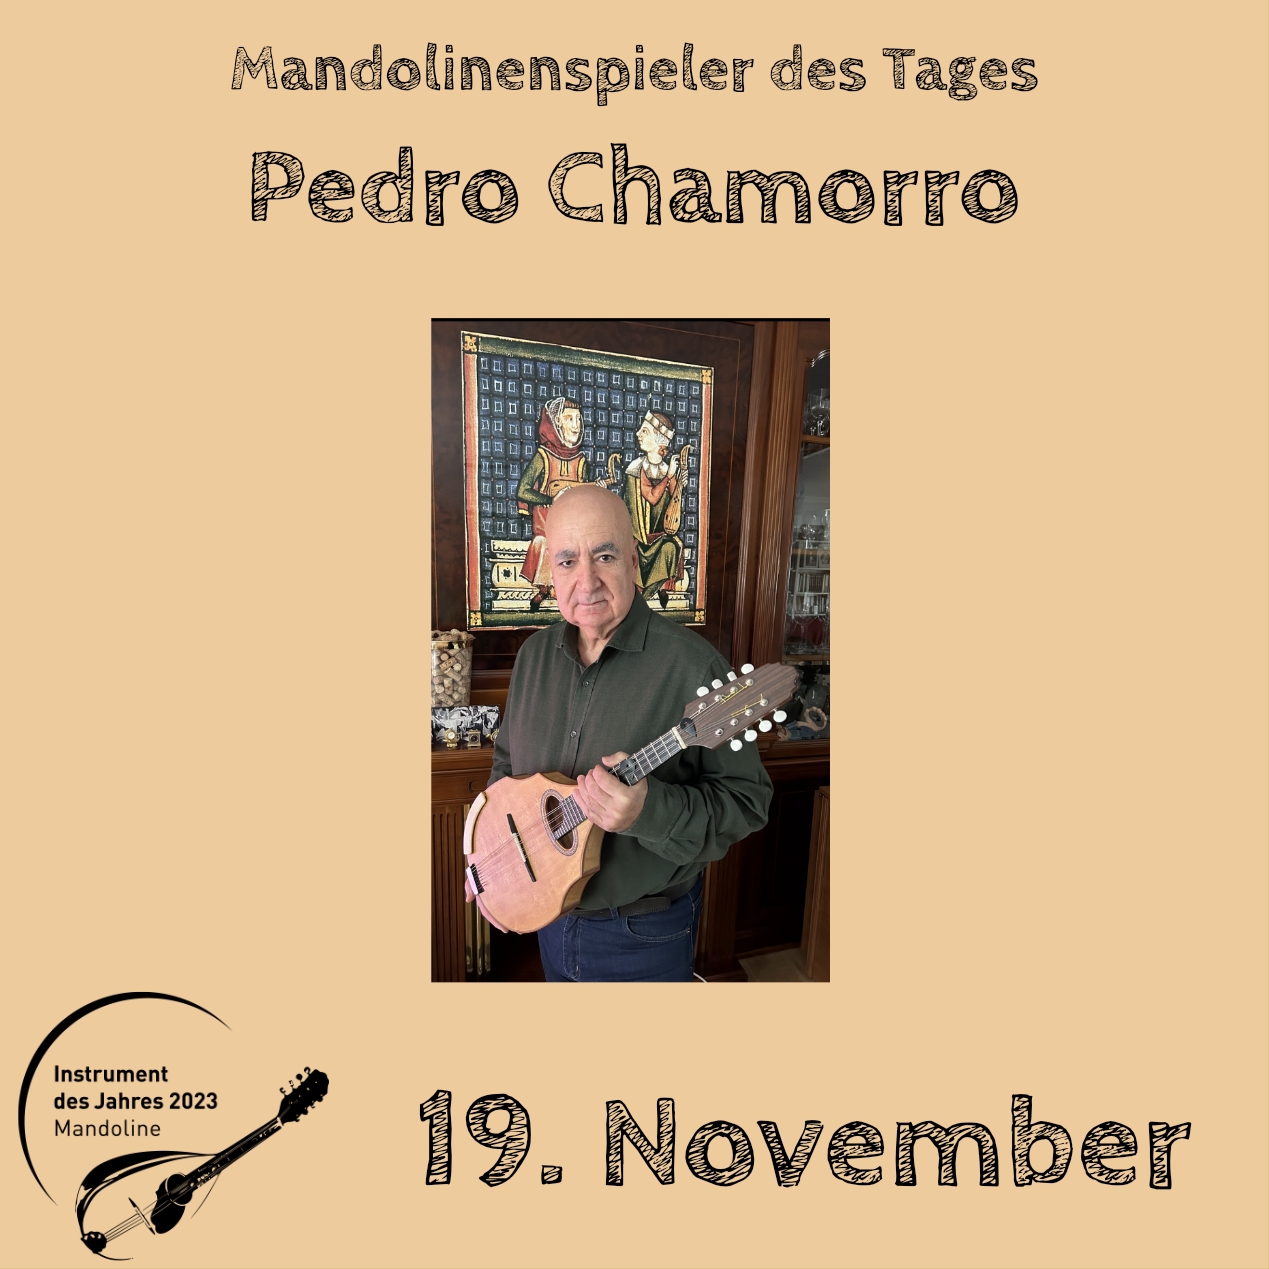 19. November - Pedro Chamorro Instrument des Jahres 2023 Mandolinenspieler Mandolinenspielerin des Tages